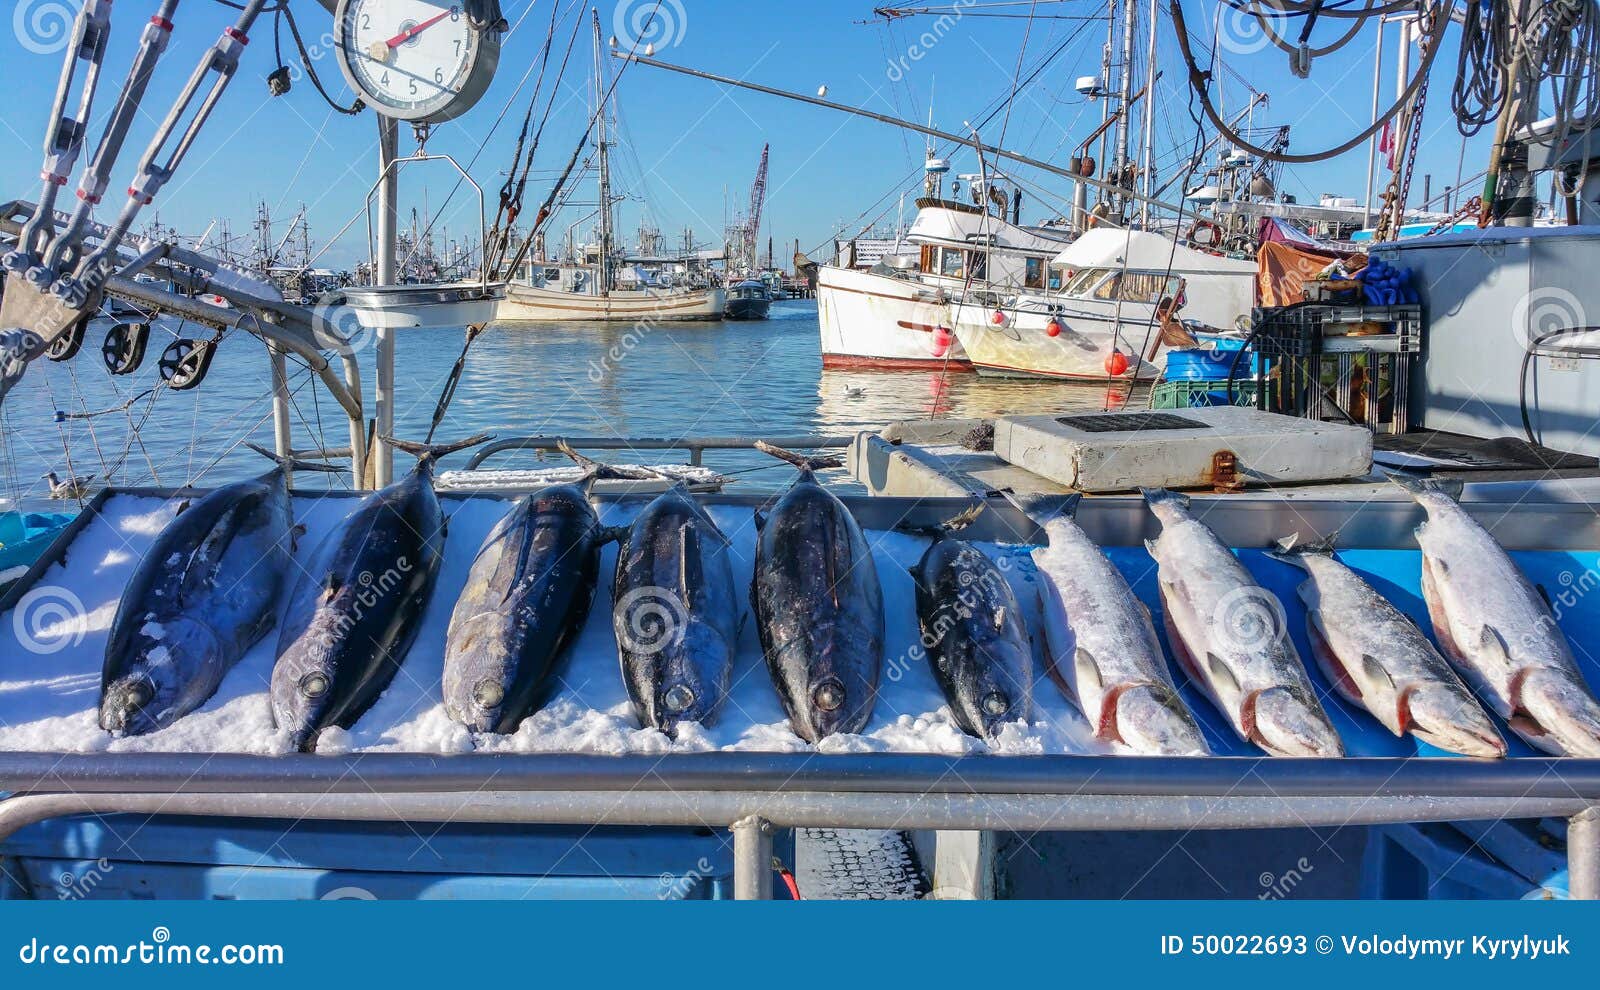 Business plan tuna export business